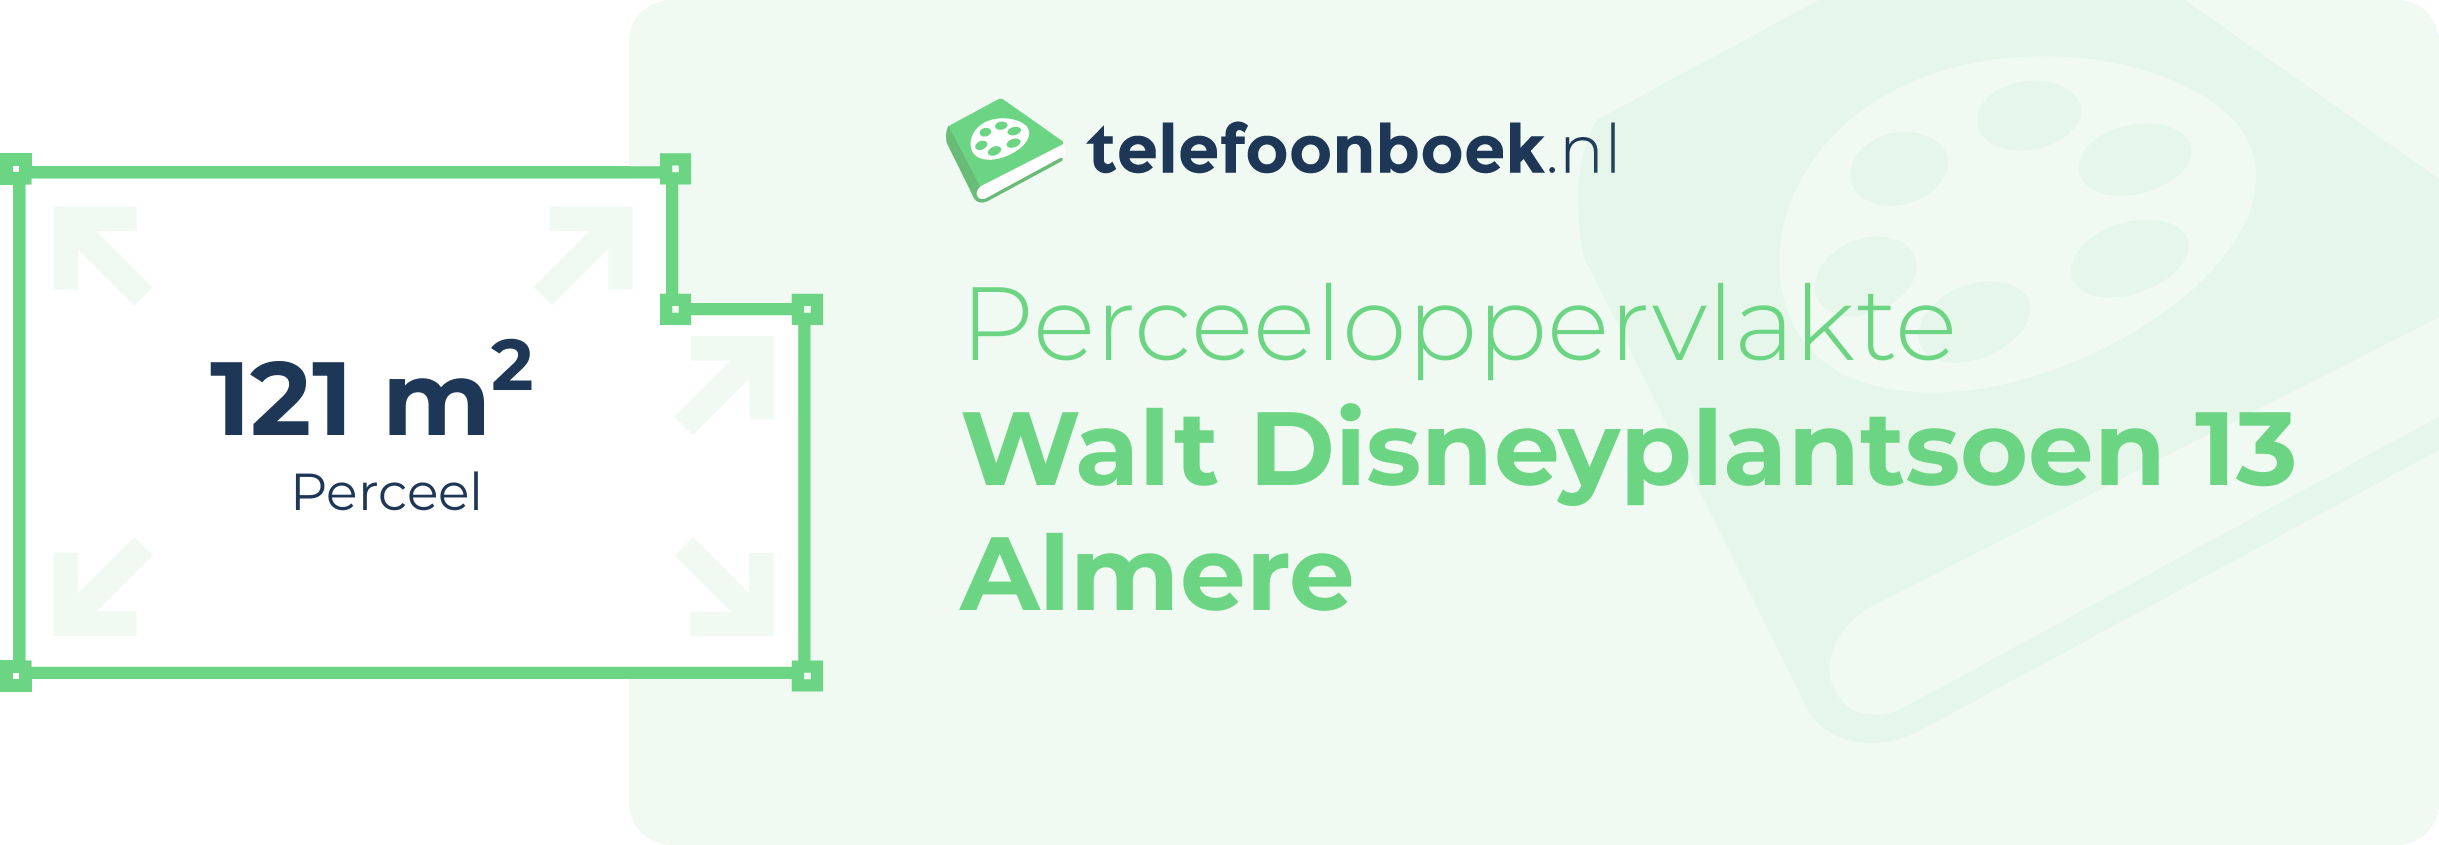 Perceeloppervlakte Walt Disneyplantsoen 13 Almere